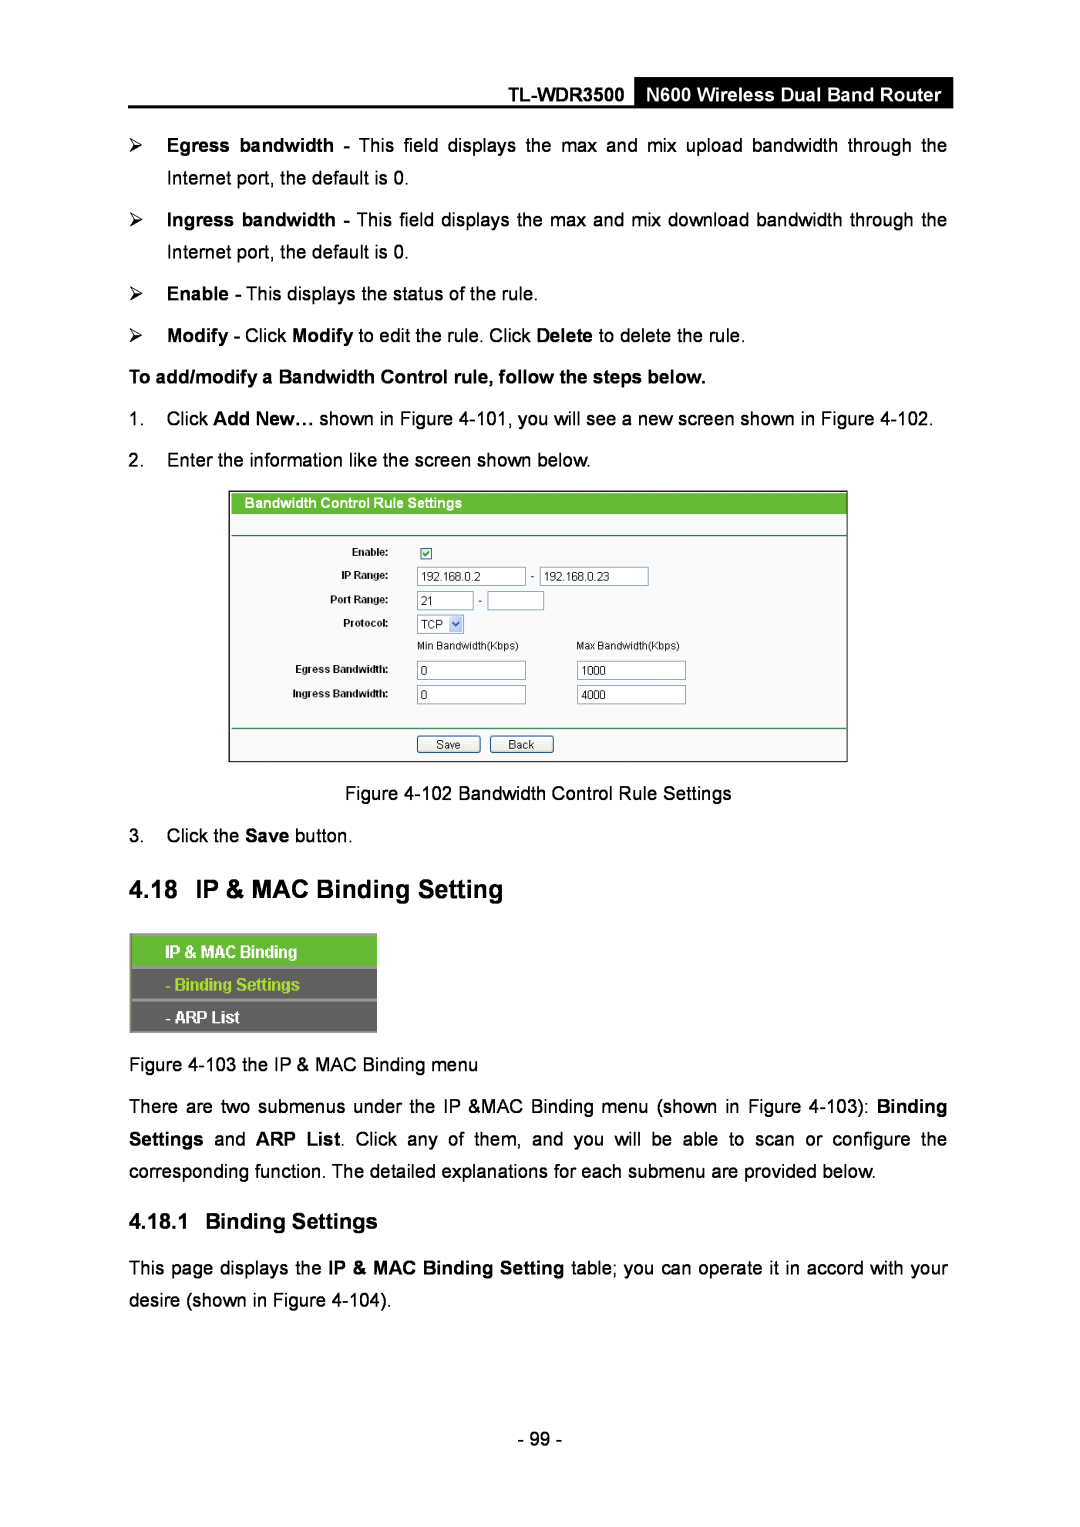 TP-Link manual 4.18 IP & MAC Binding Setting, Binding Settings, TL-WDR3500 N600 Wireless Dual Band Router 